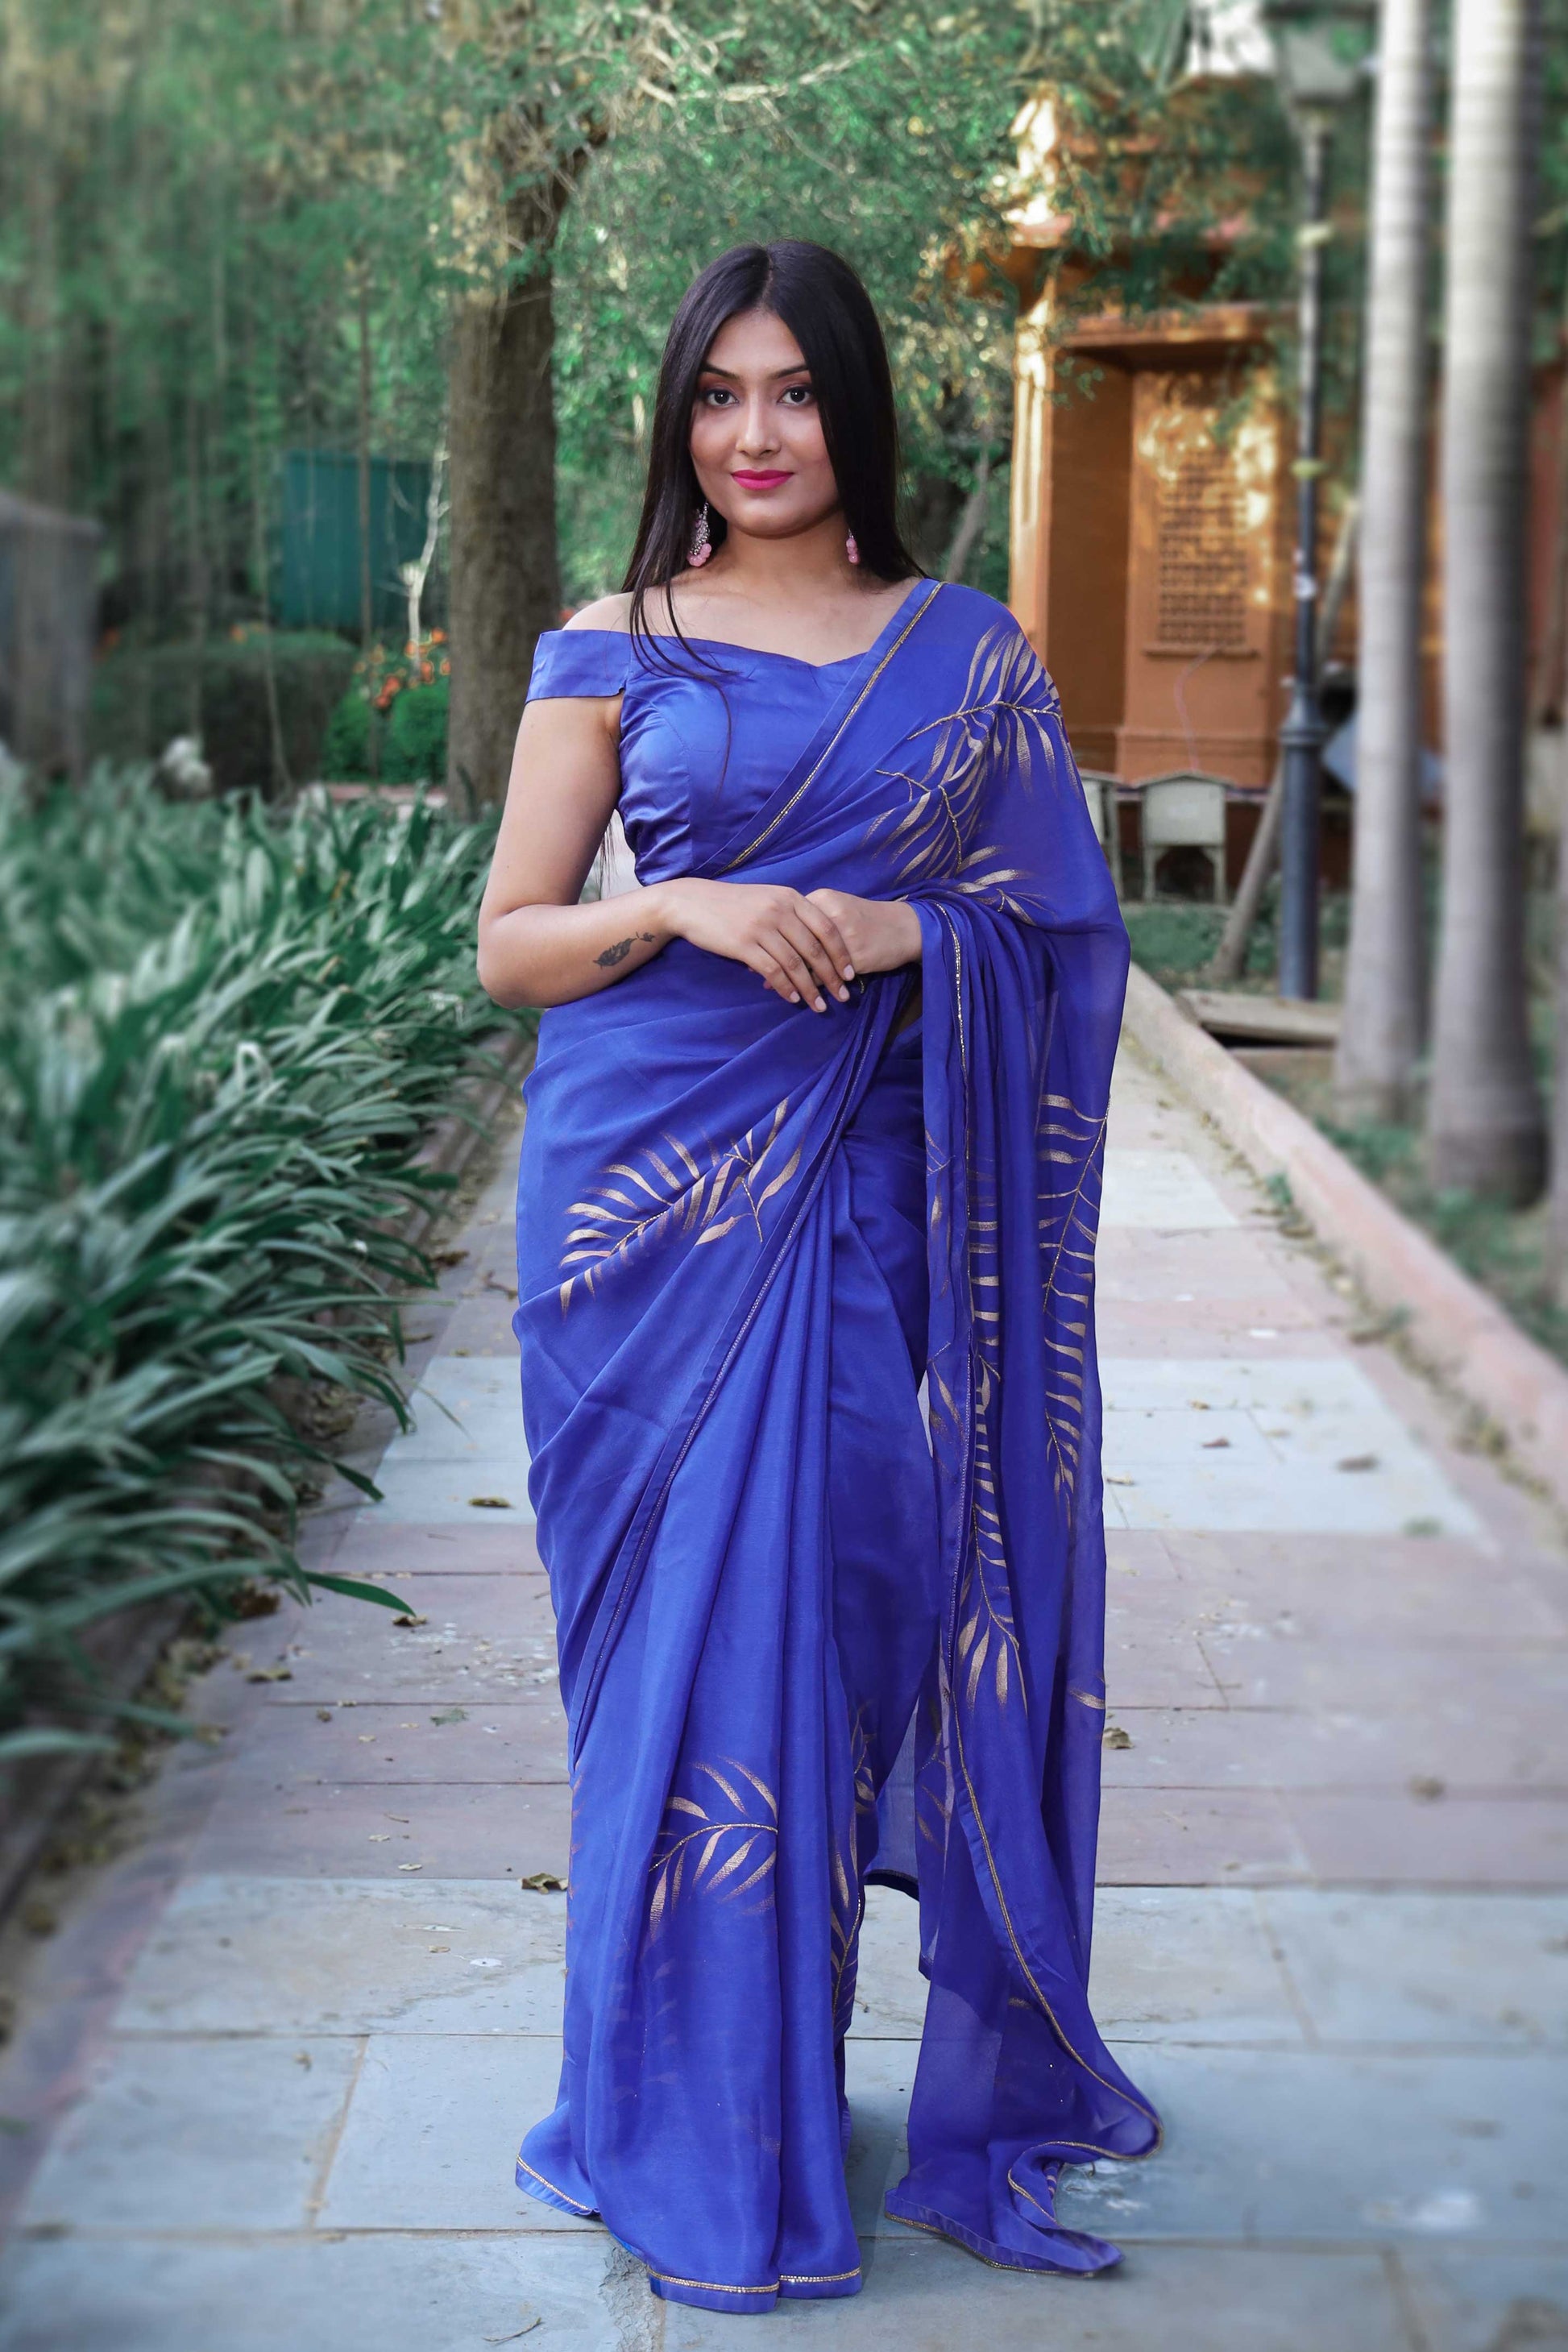 How to Drape Chiffon Saree Neatly? Unique Ways to Get an Elegant Look?